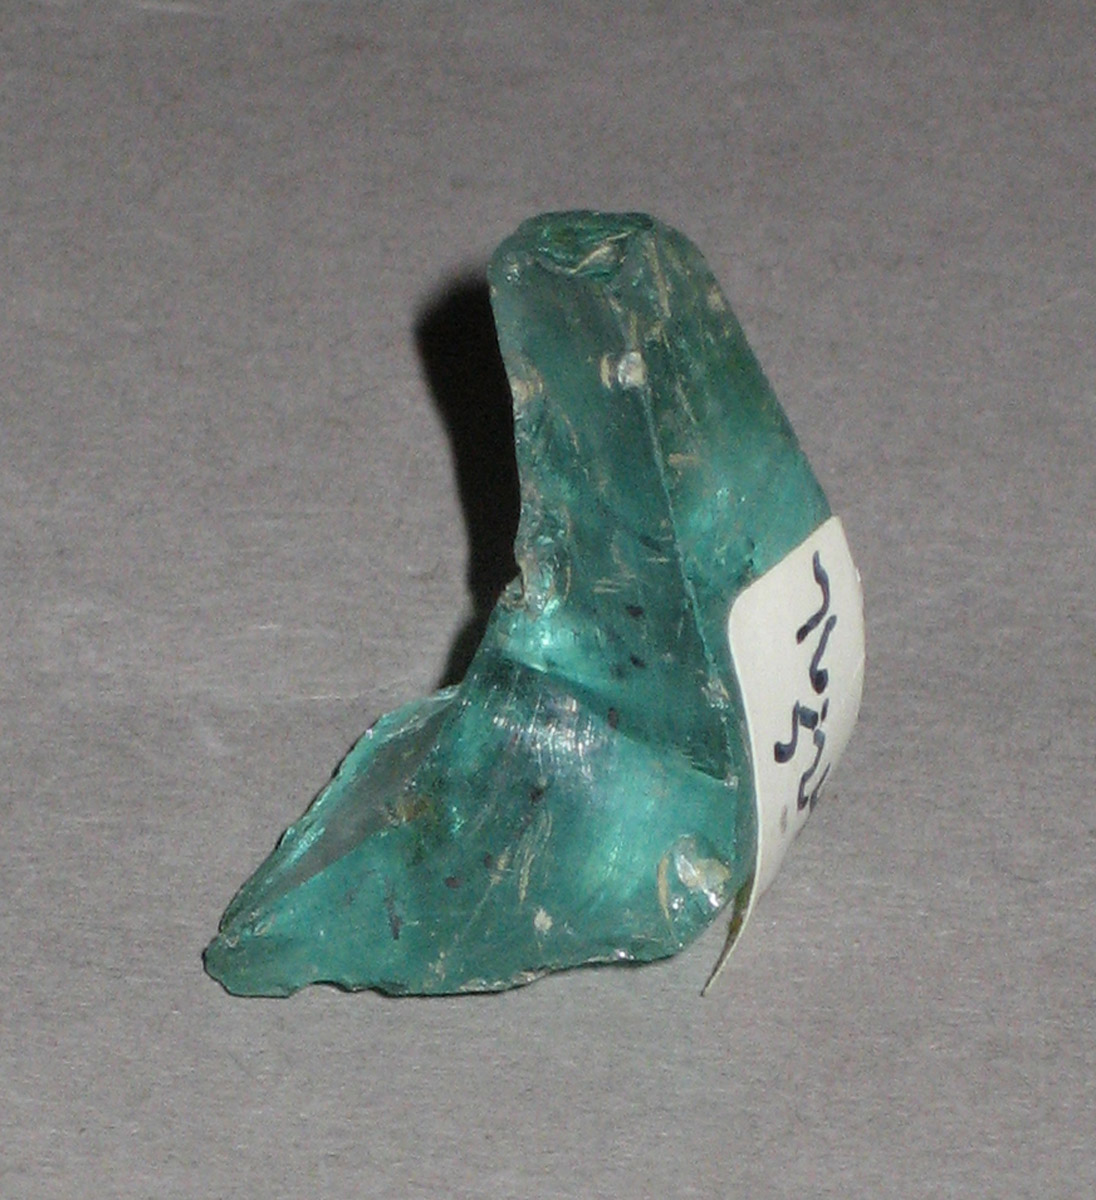 1976.0524.009 Glass fragment